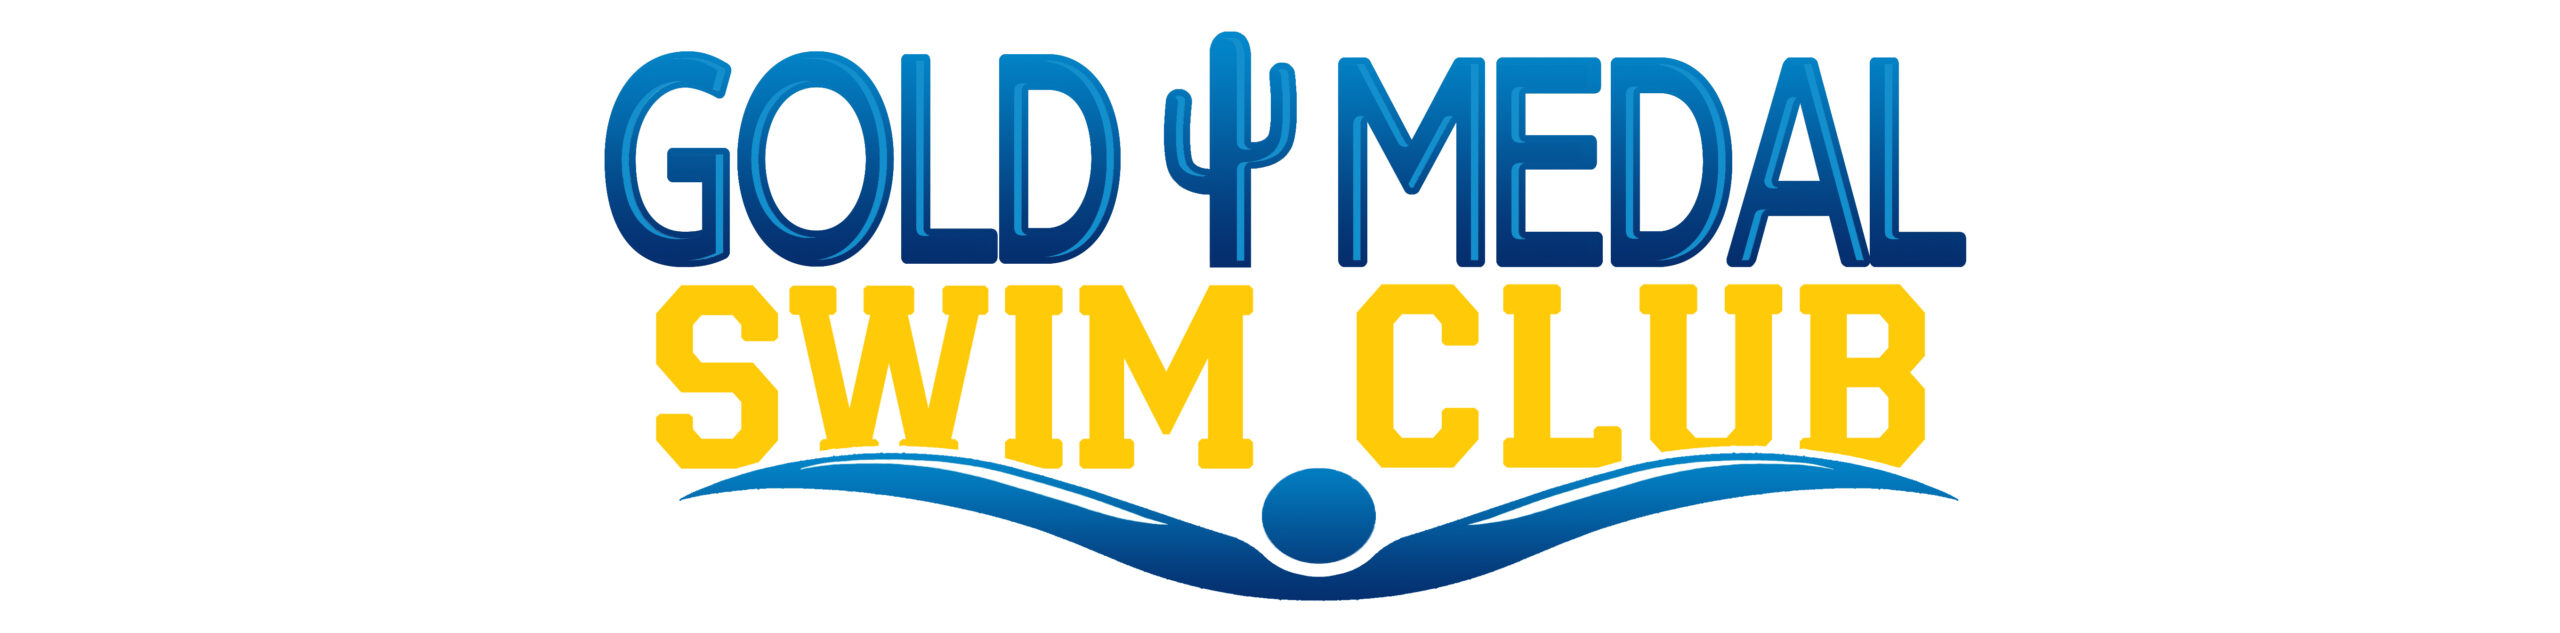 Gold Medal Swim Club